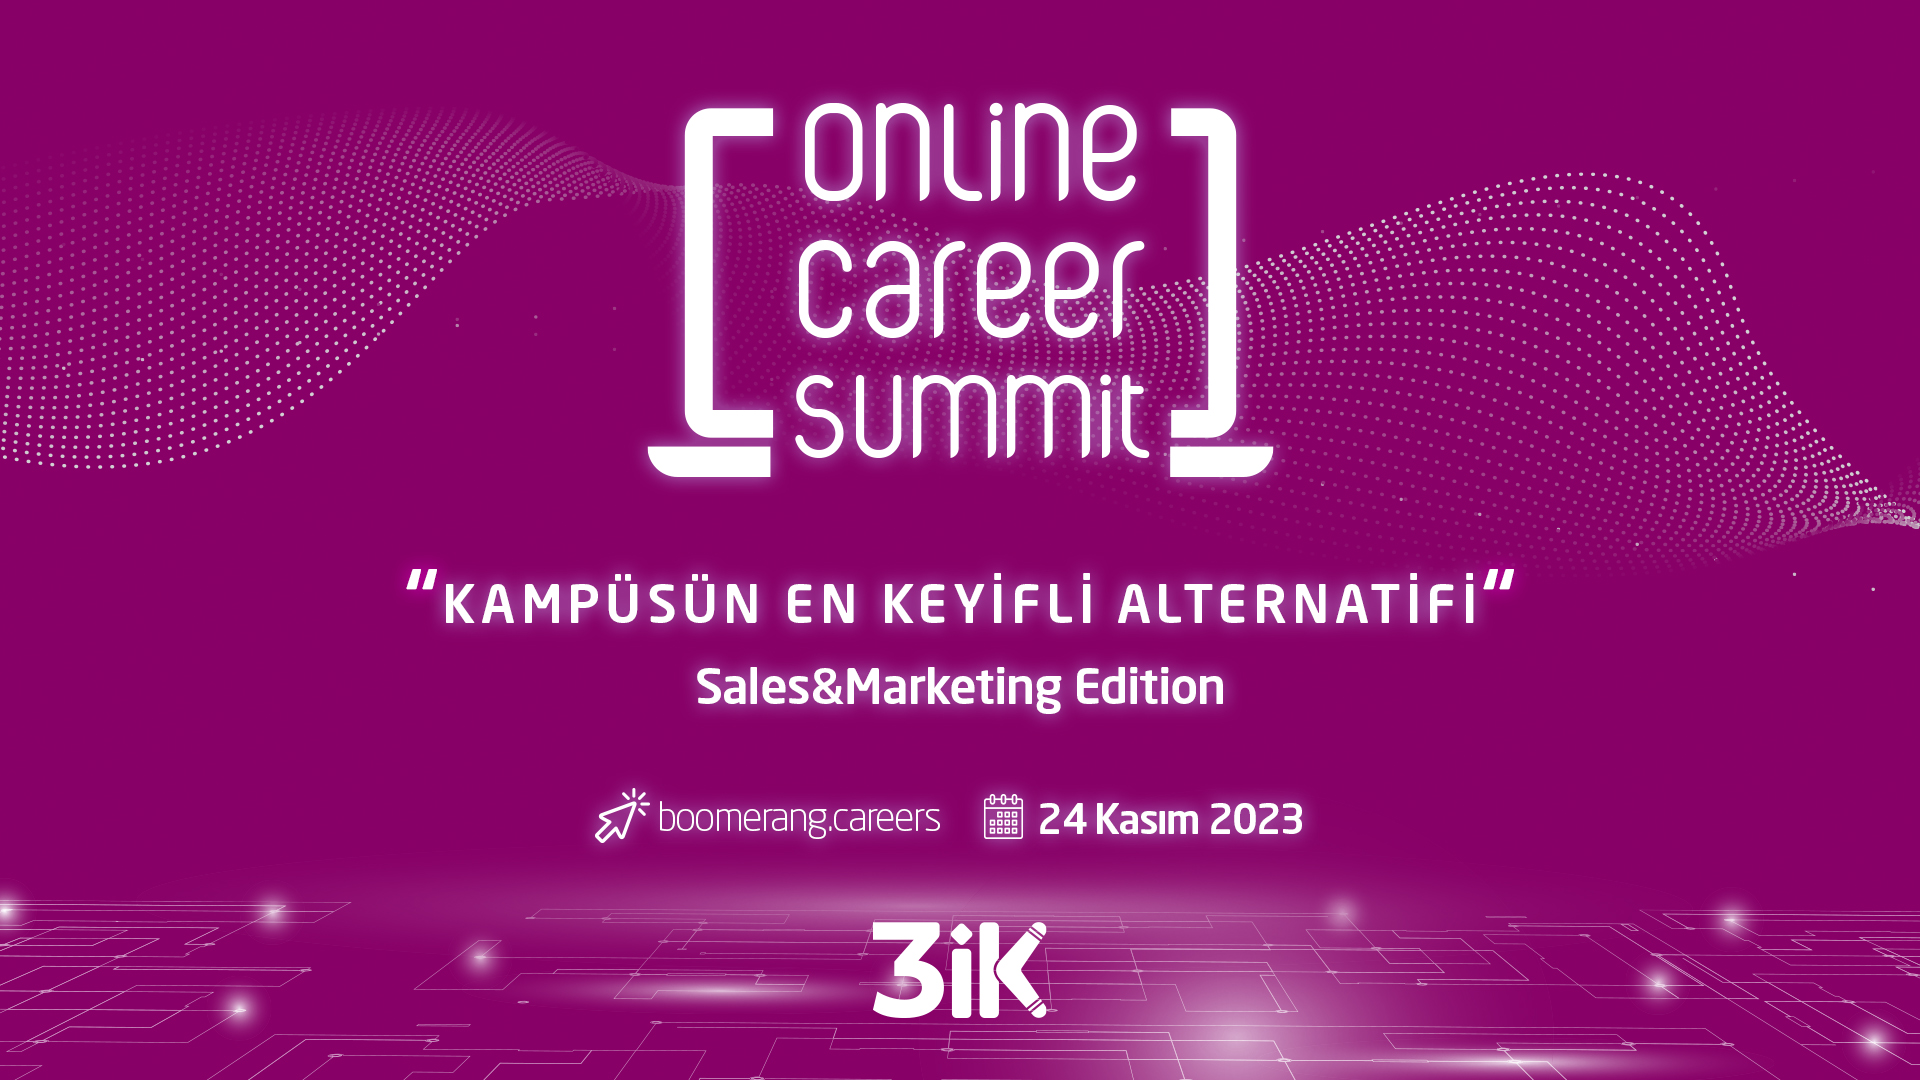 Online Career Summit: Sales&Marketing Edition